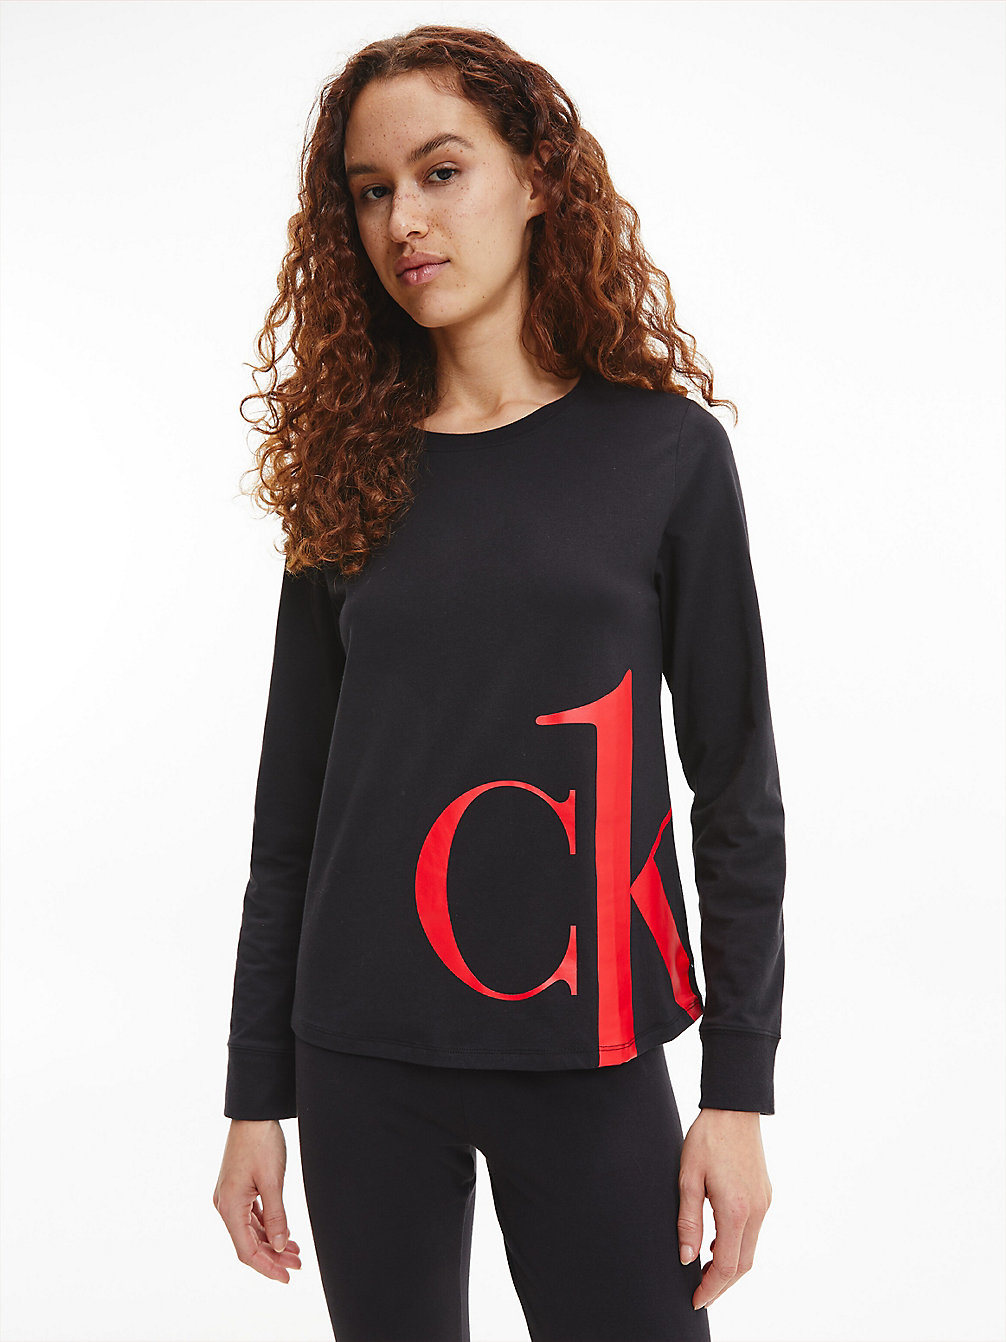 BLACK_EXACT LOGO Haut De Pyjama - CK One undefined femmes Calvin Klein